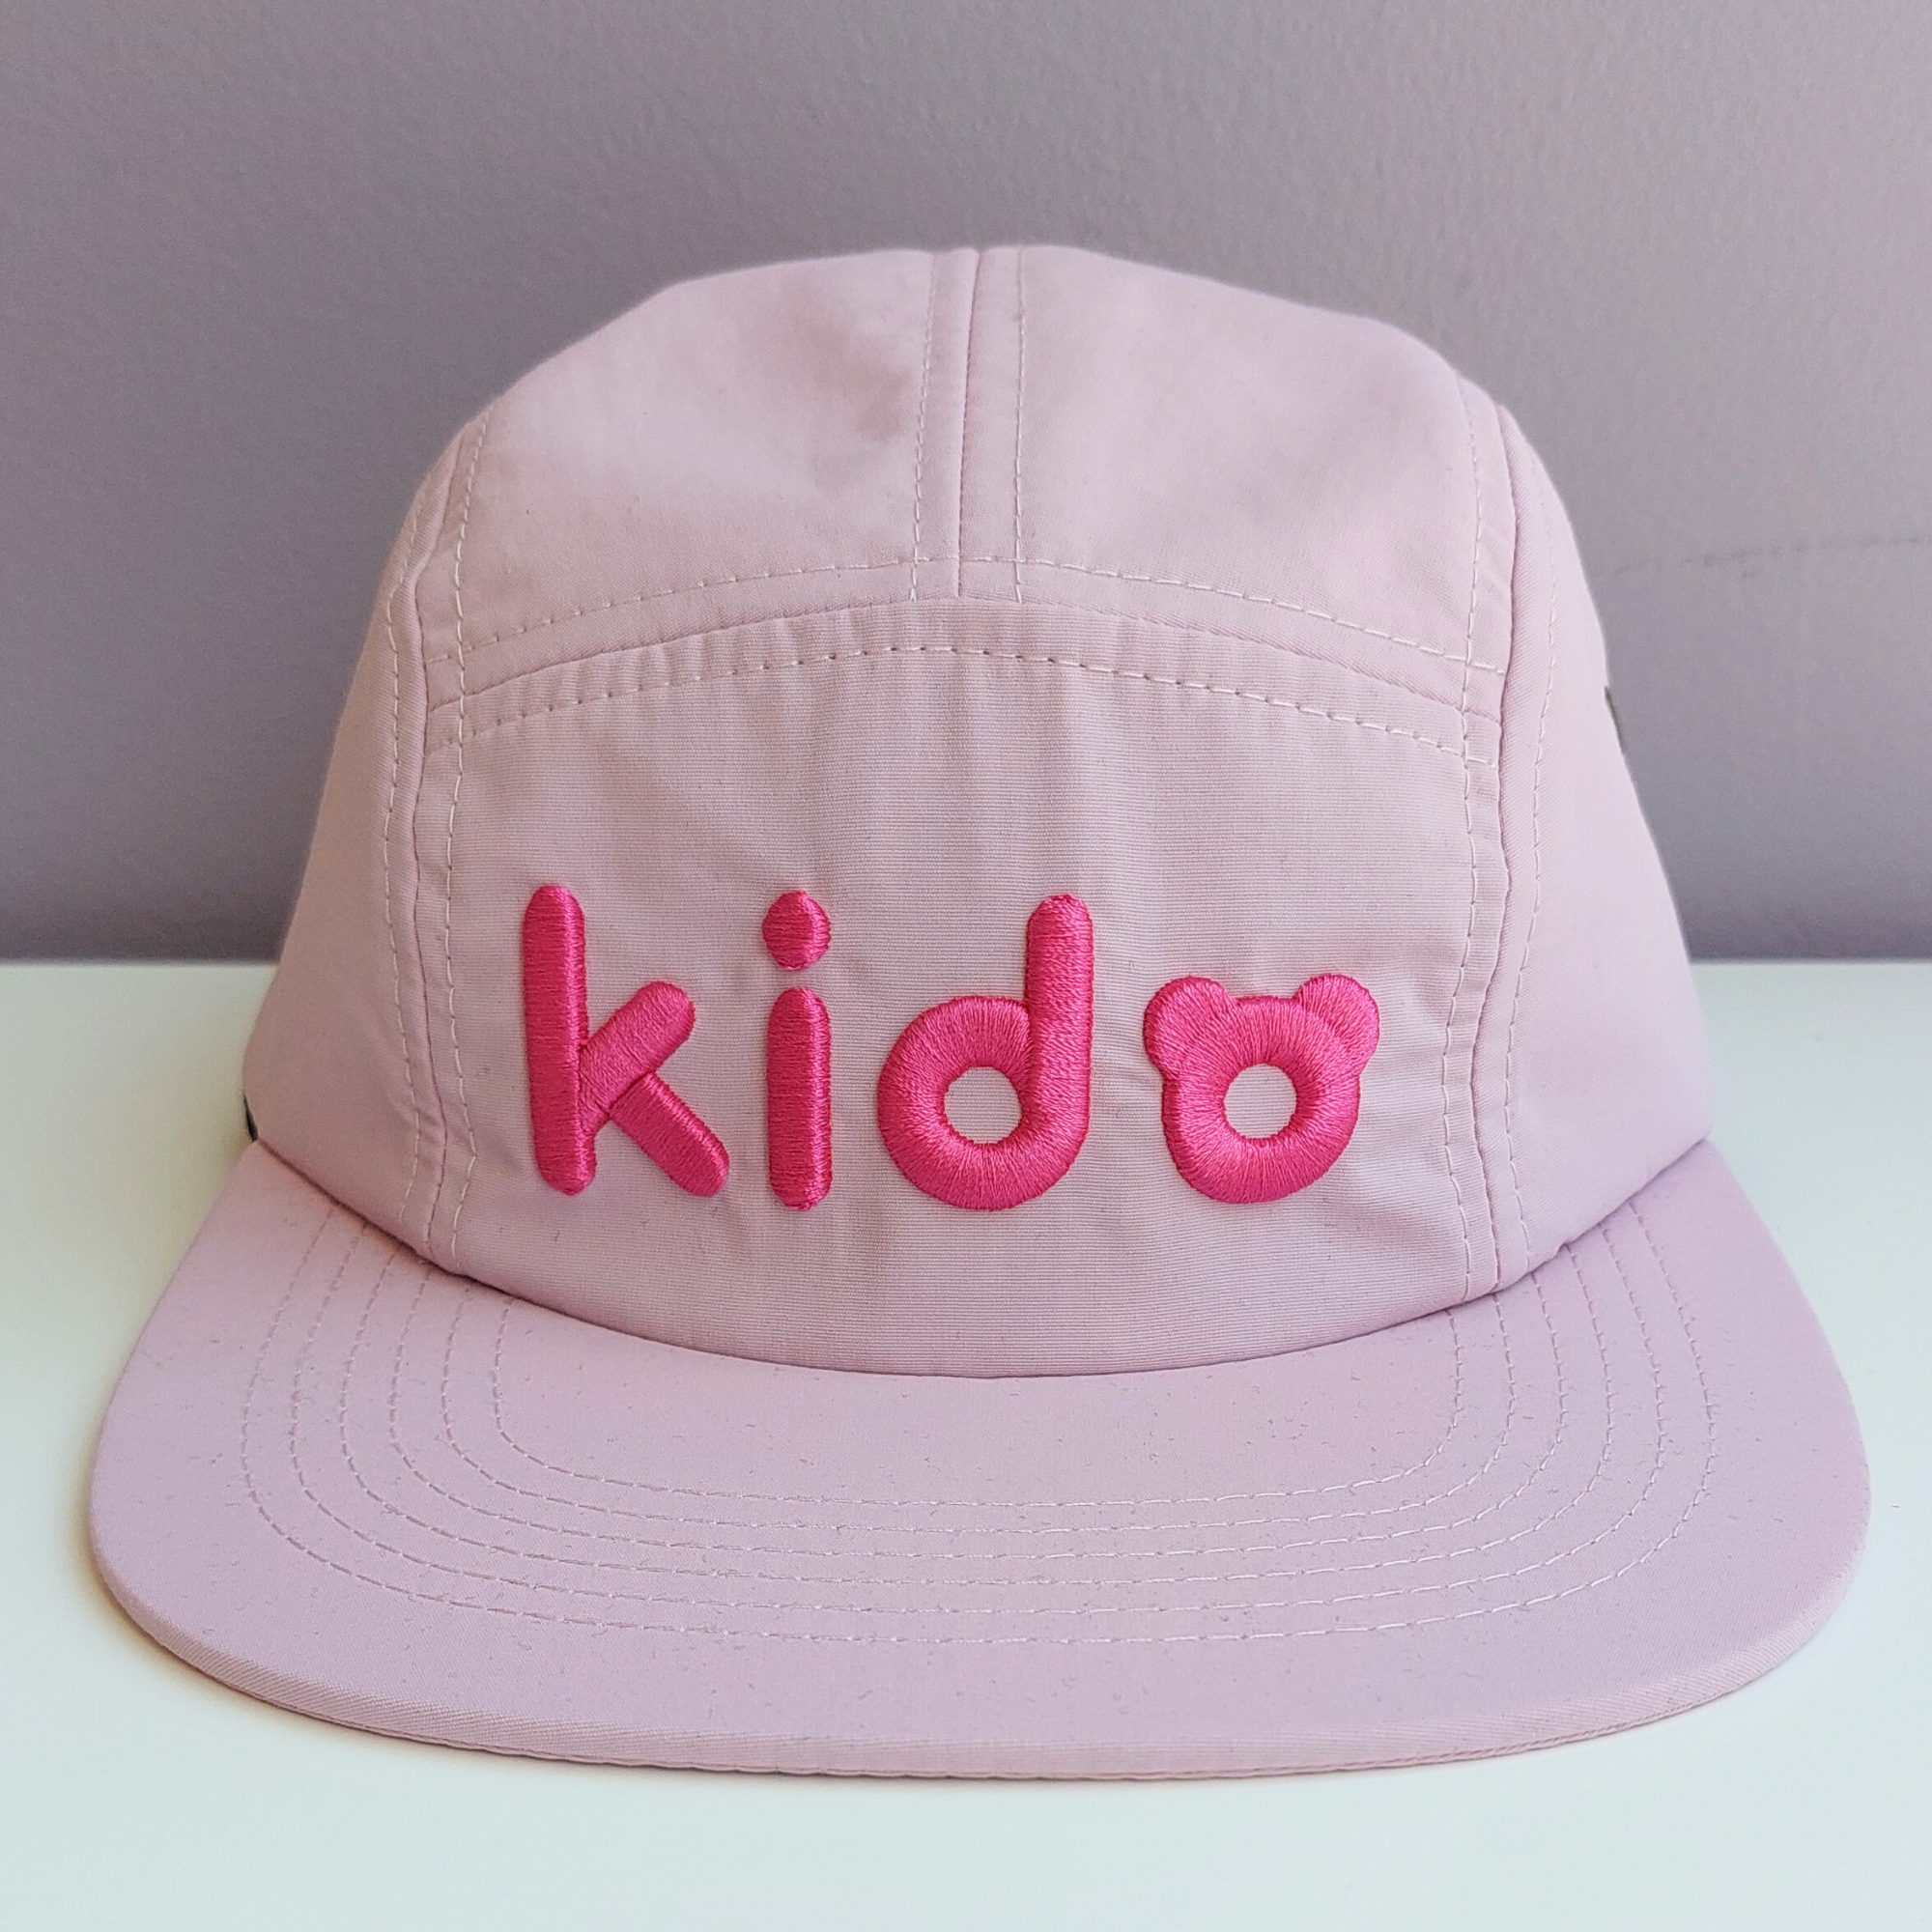 Kido 5 Panel Cap - Pale Pink